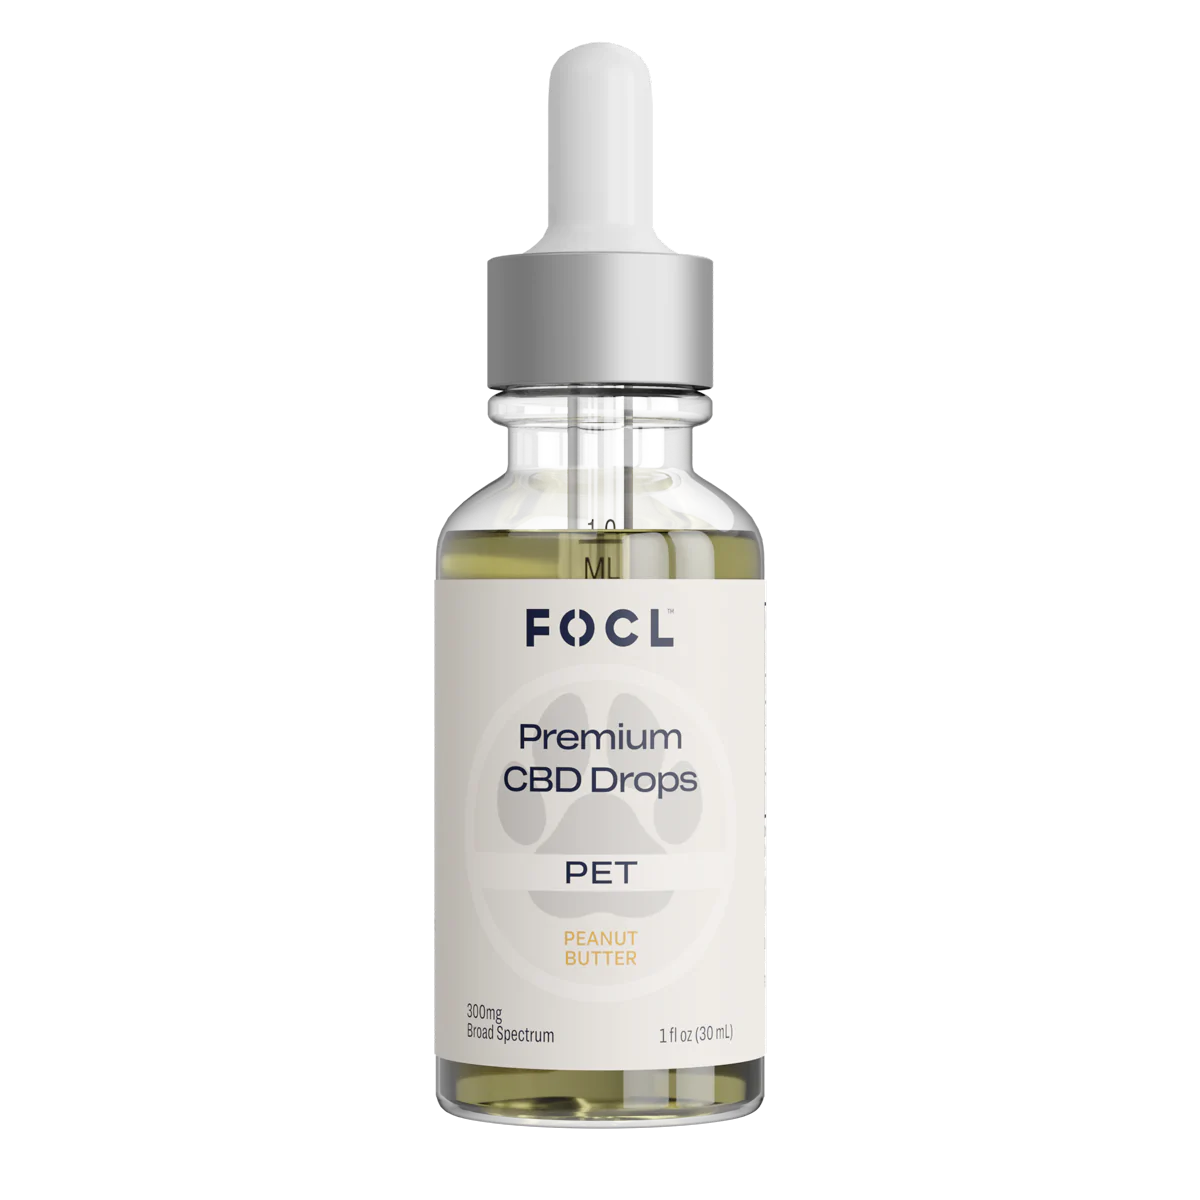 FOCL – Premium CBD Pet Drops available in 3 different flavors